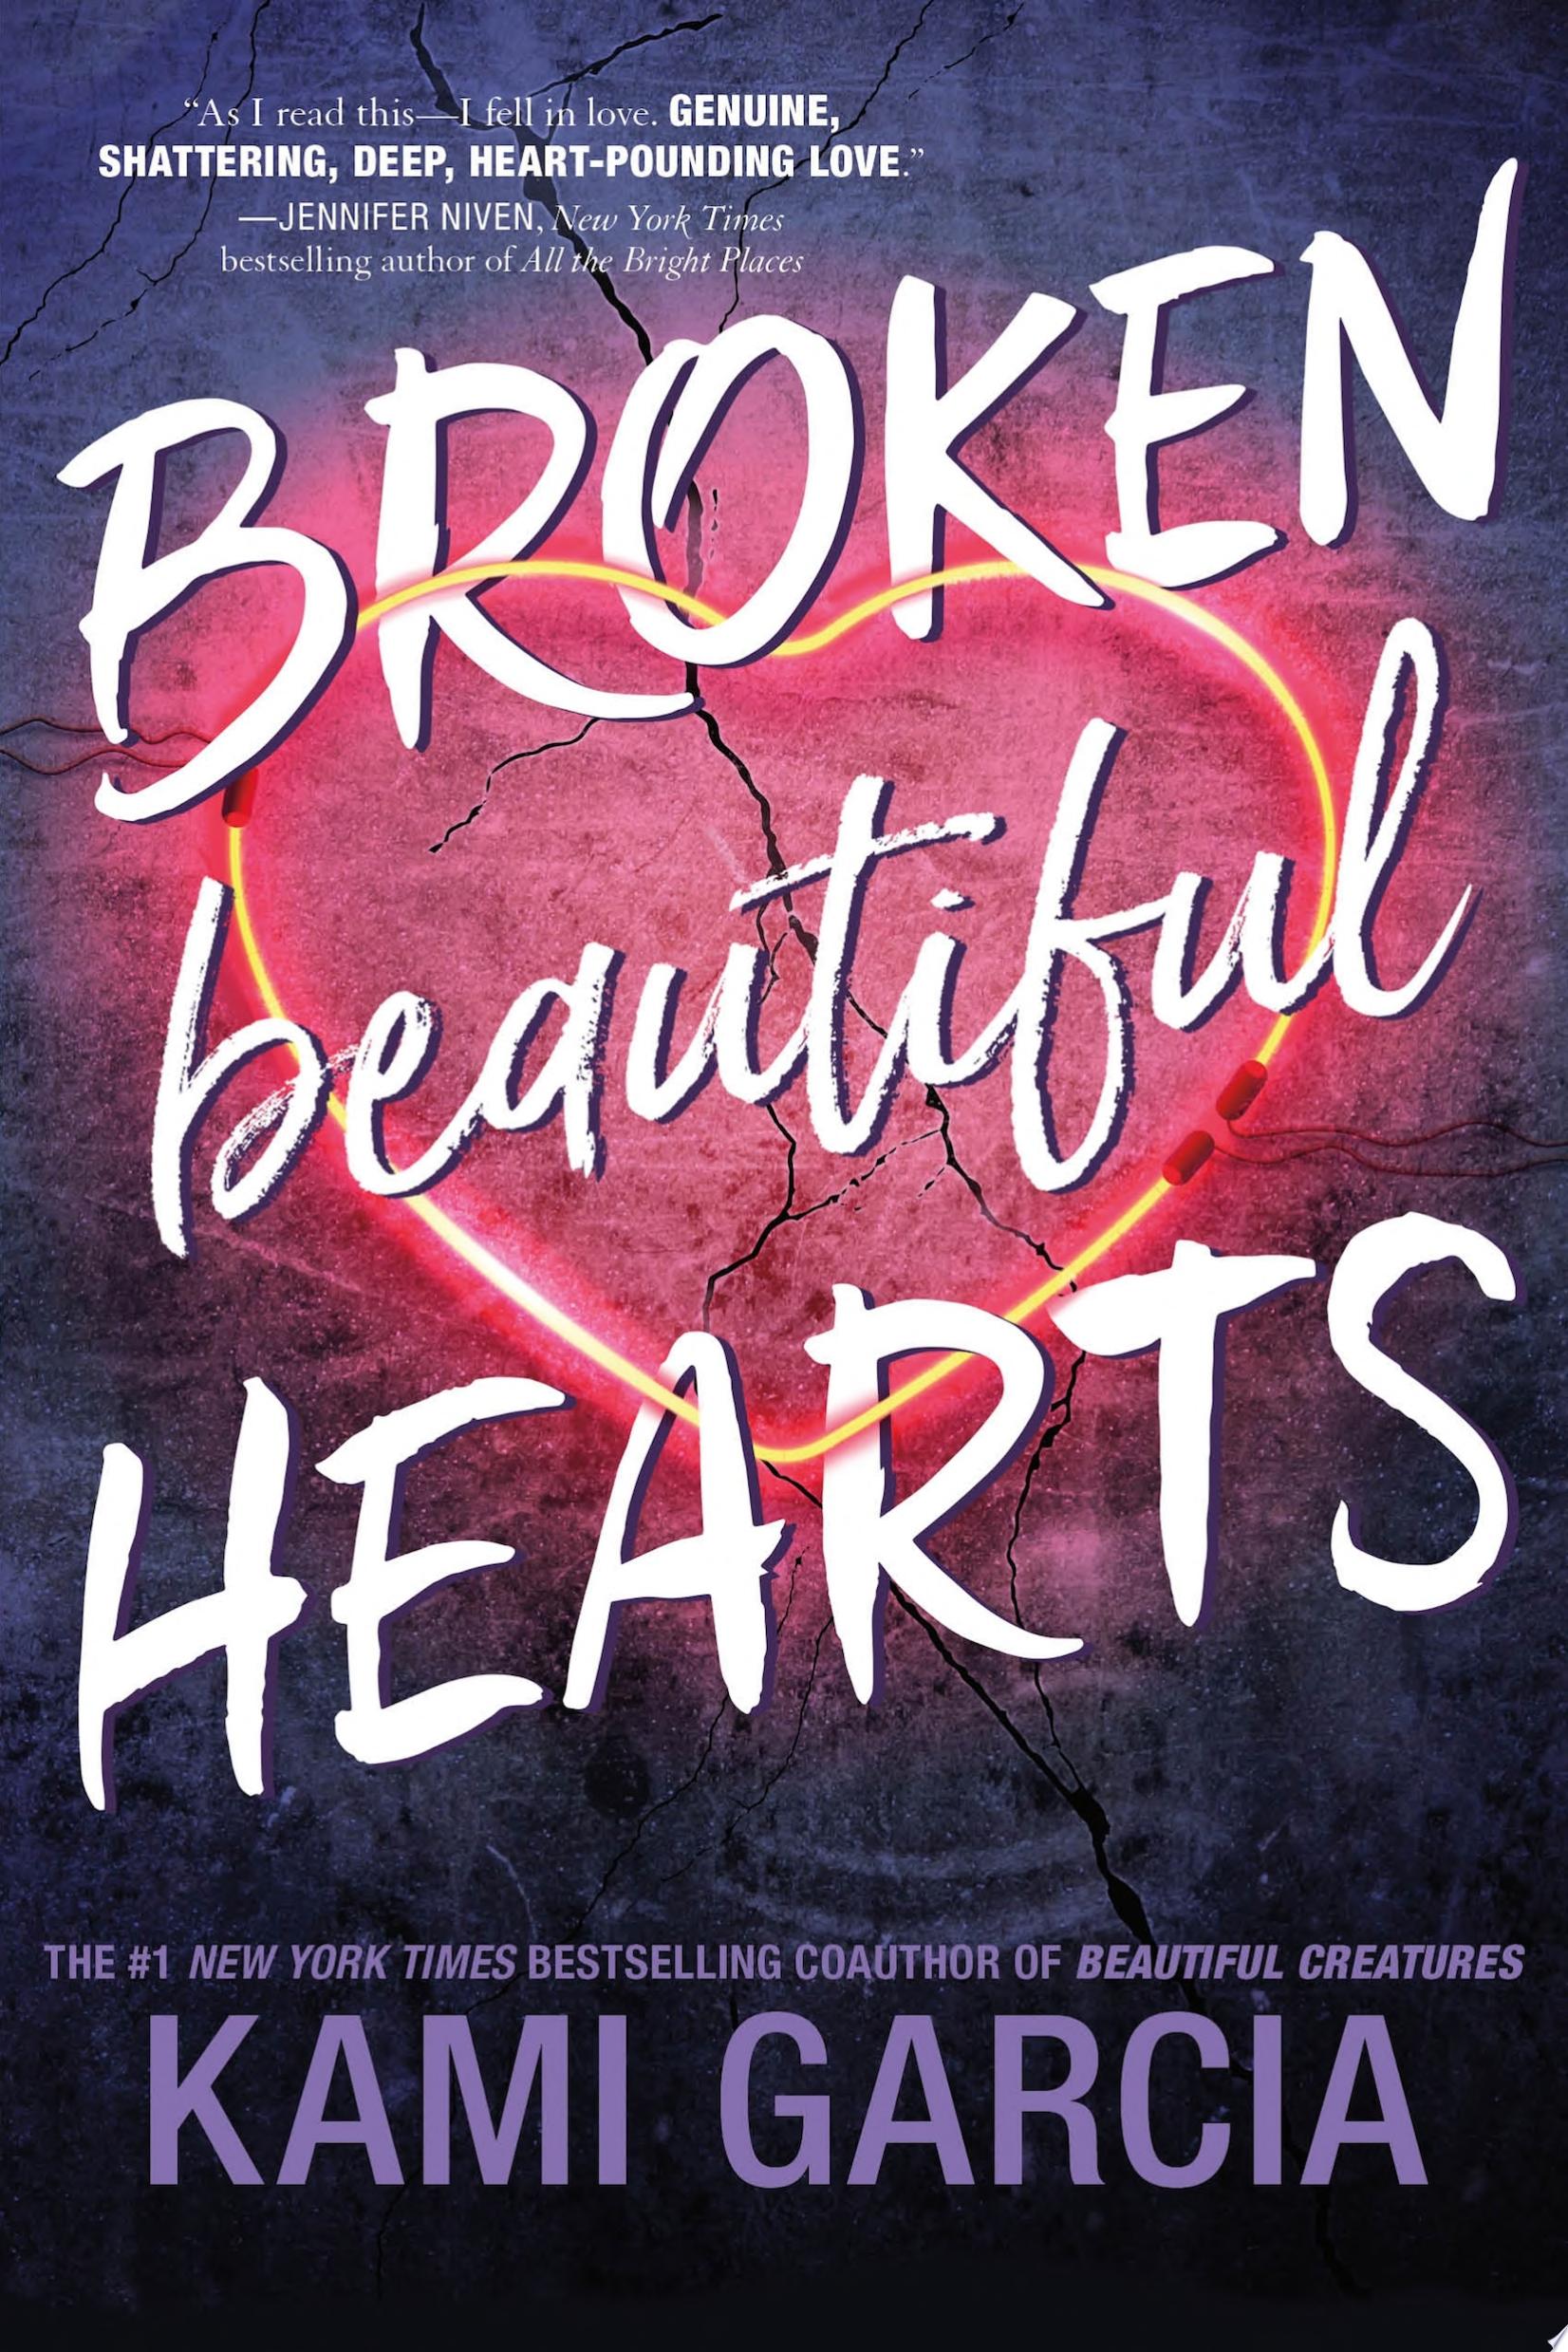 Image for "Broken Beautiful Hearts"